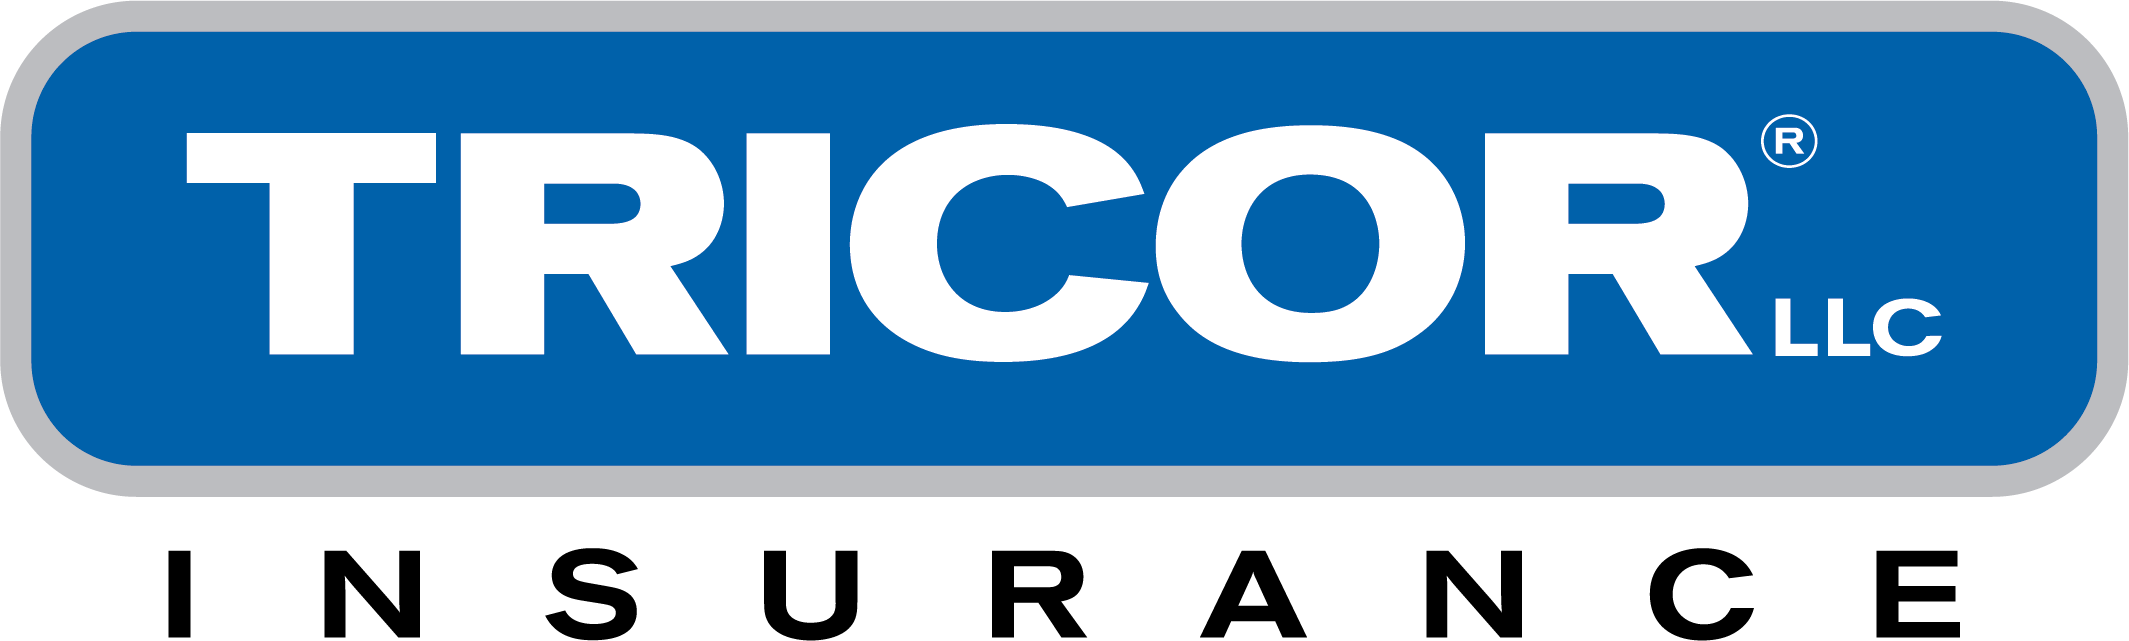 Tricor logo image